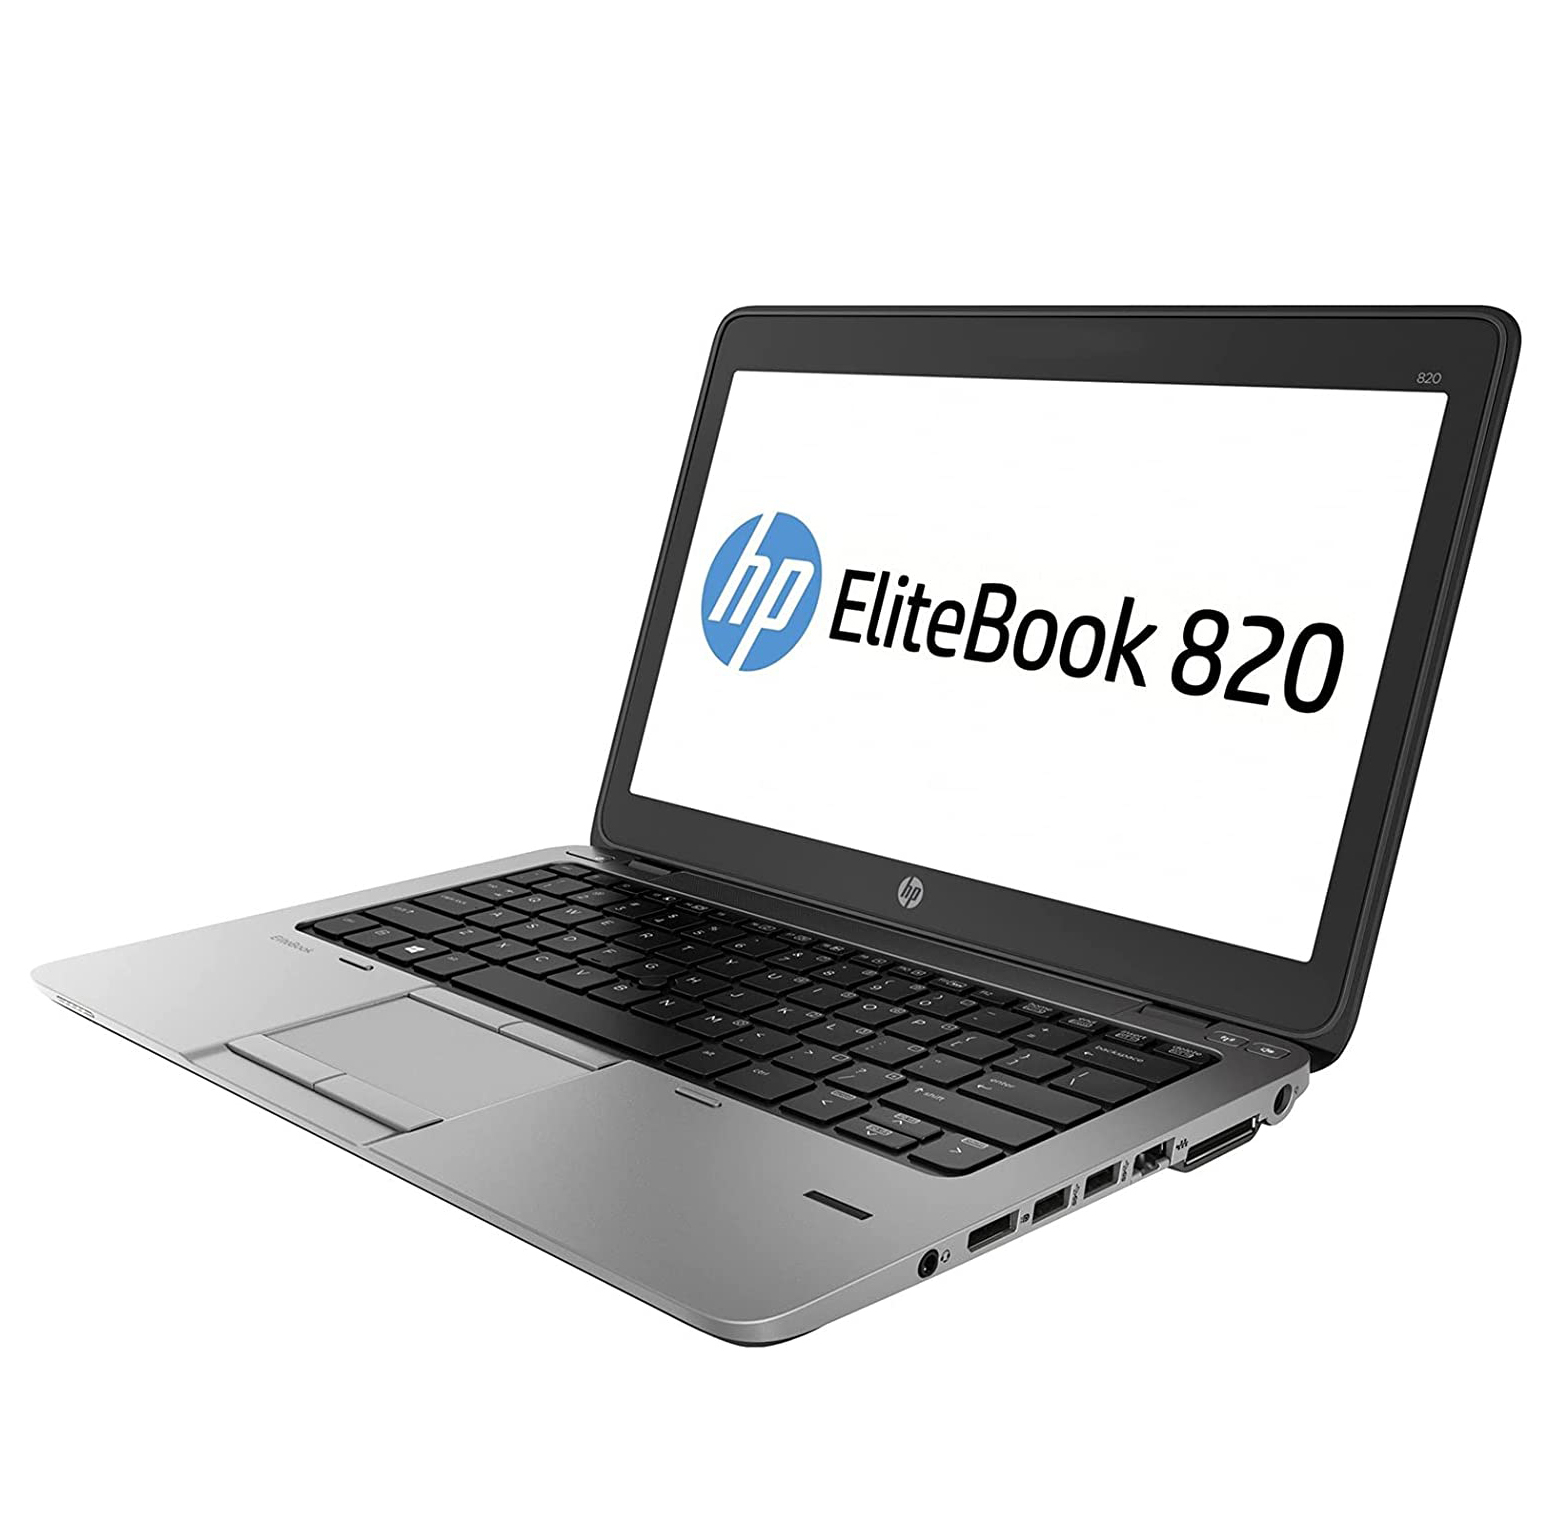 Portátil HP ProBook 820 G2